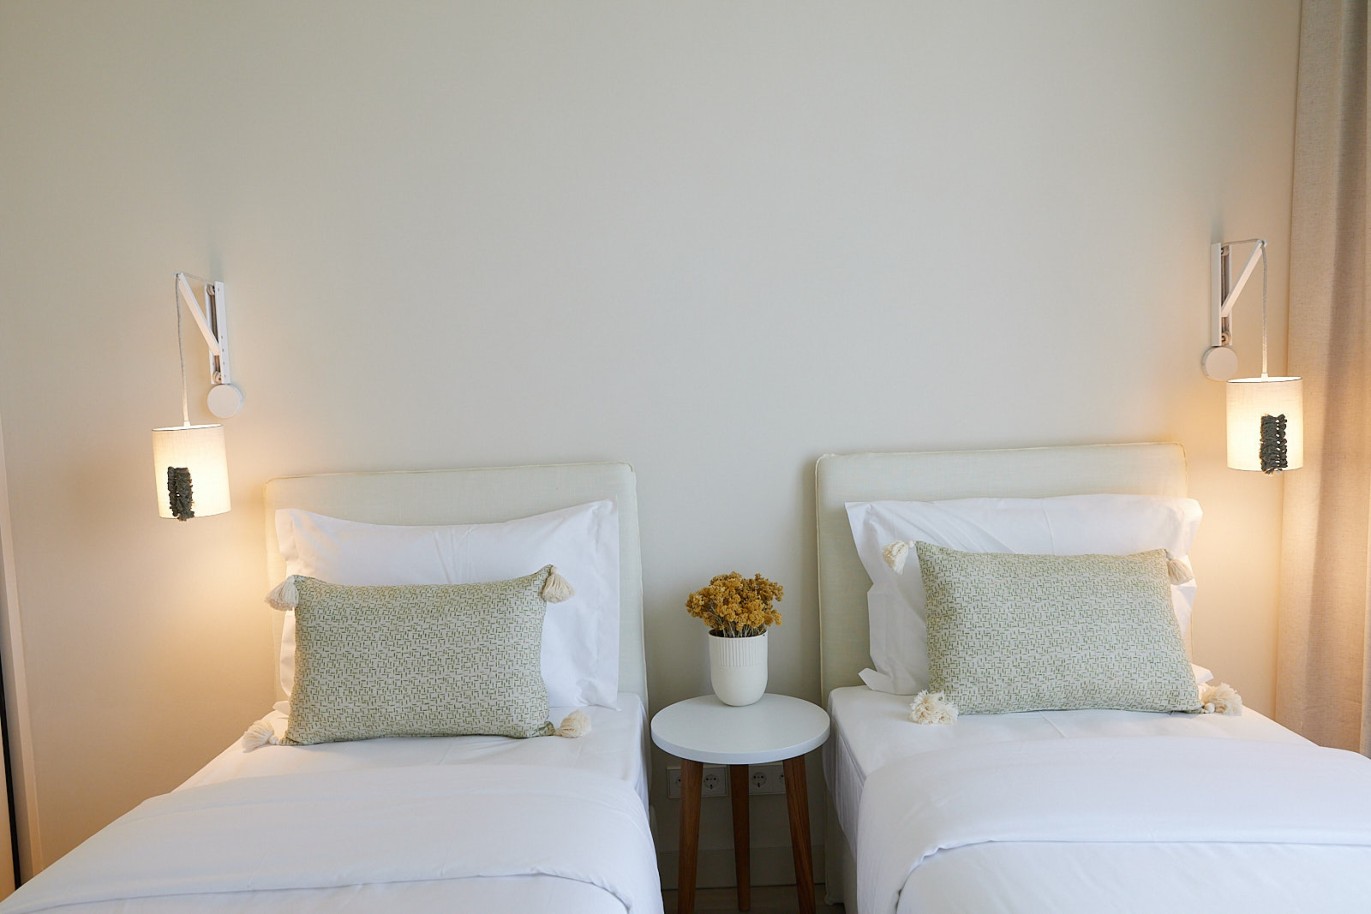 2 bedroom apartment in resort, for sale in Porches, Algarve_230687